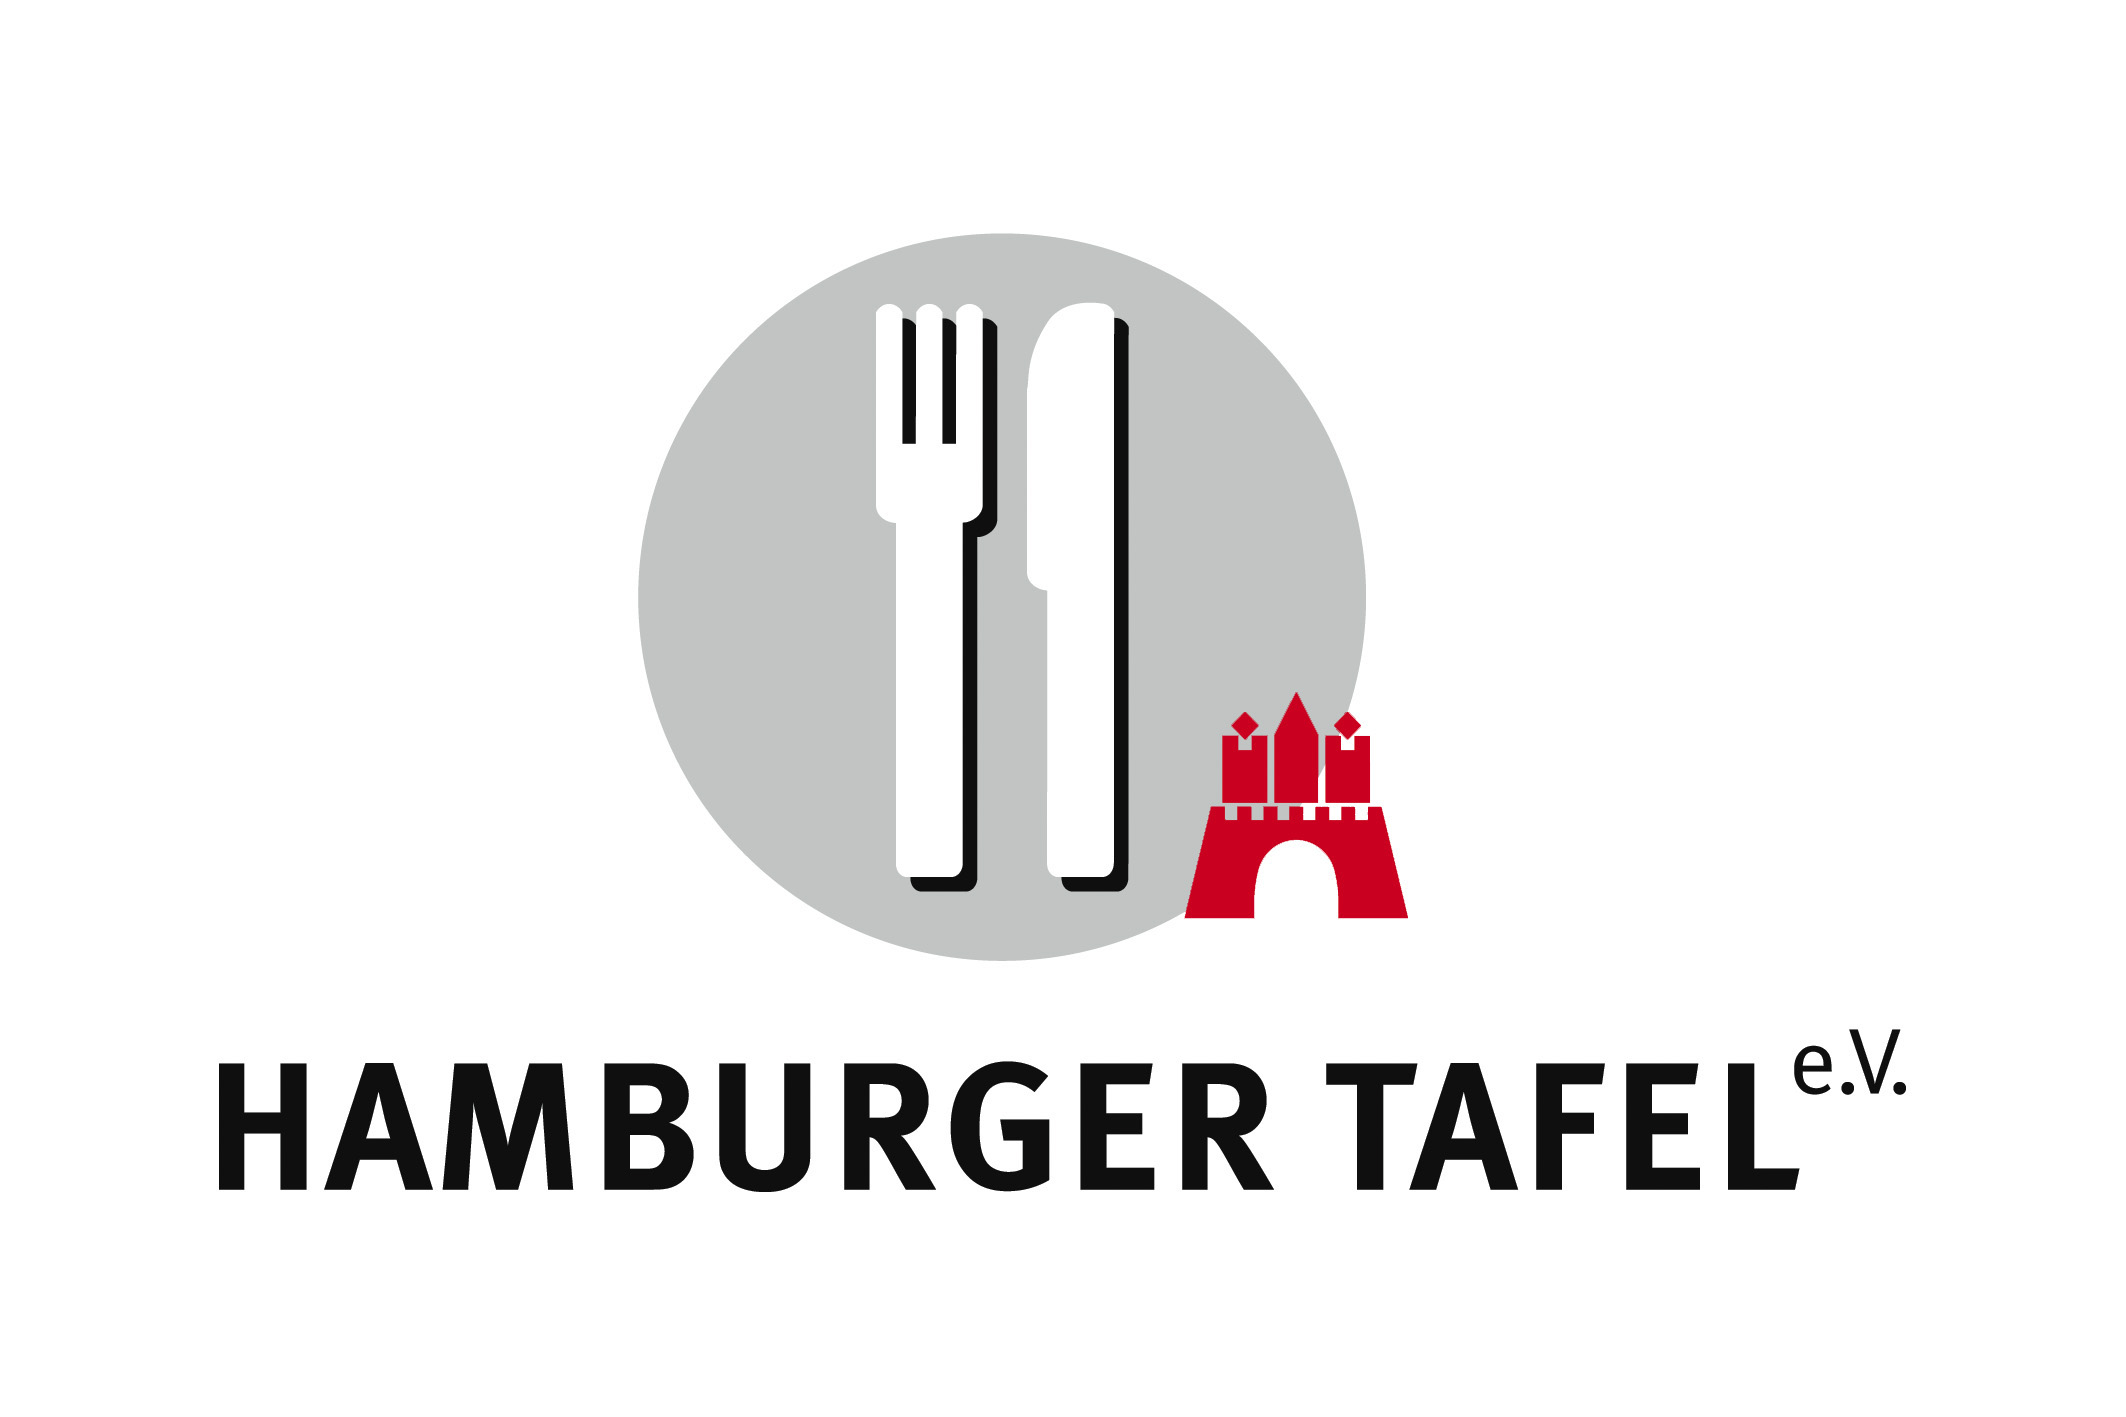 Das Logo kombiniert den Schriftzug "Hamburger Tafel e.V." mit Besteck und dem Hamburg-Wappen